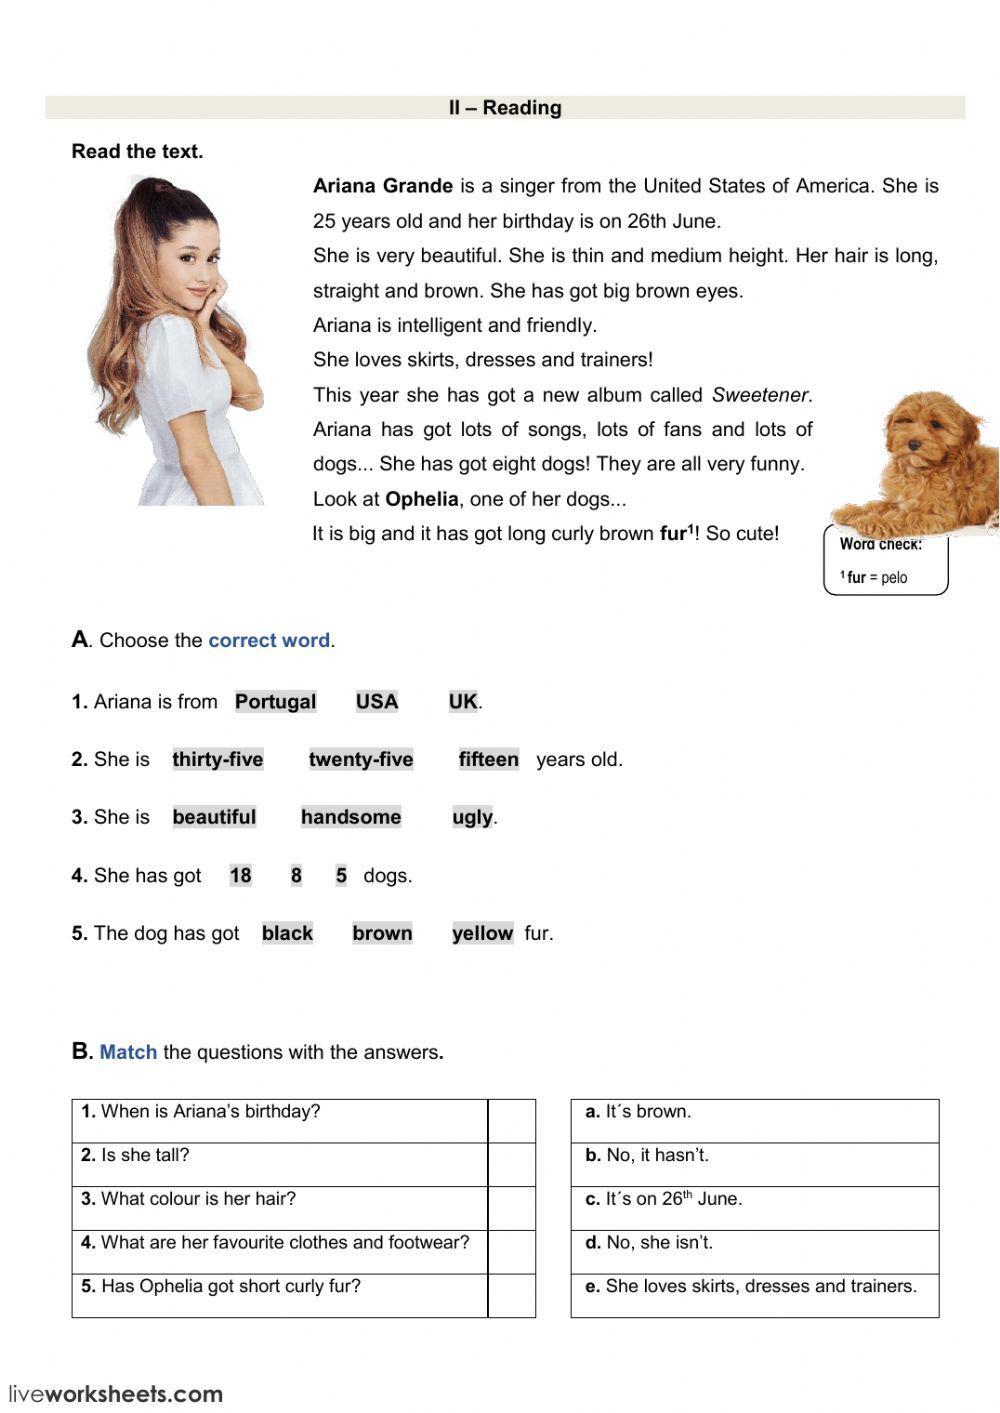 Reading test - Ariana Grande